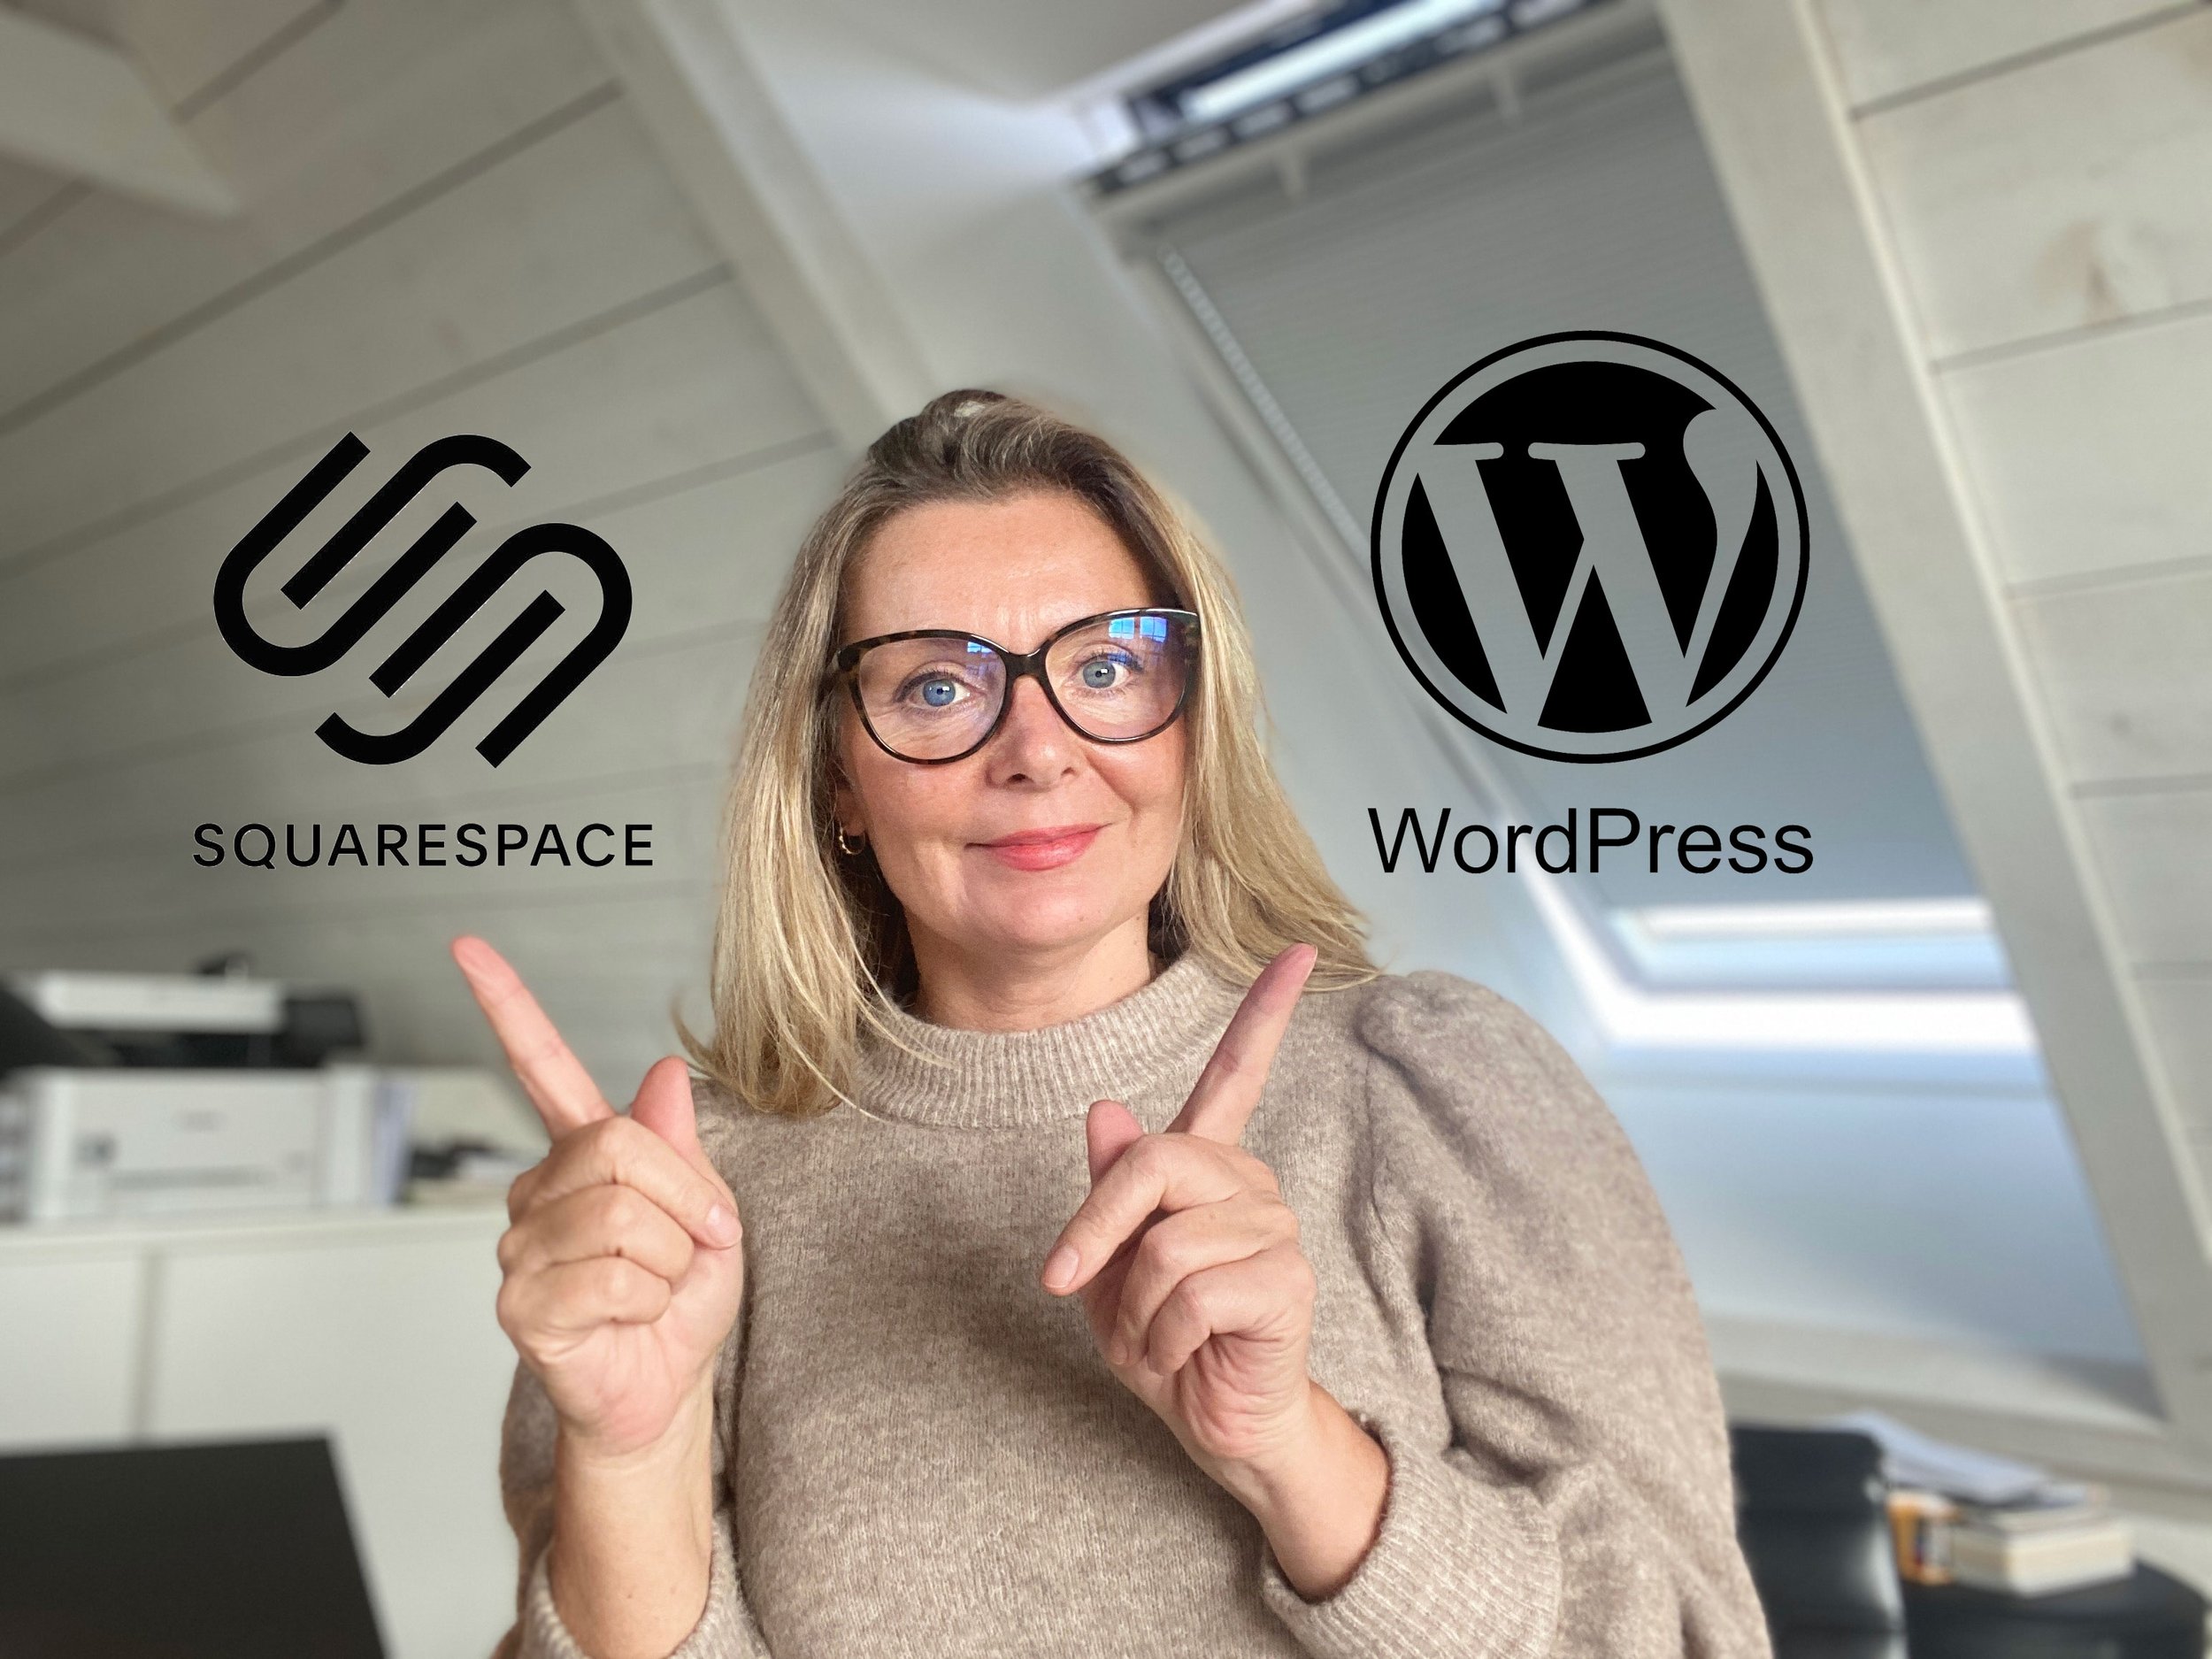 Squarespace versus WordPress?